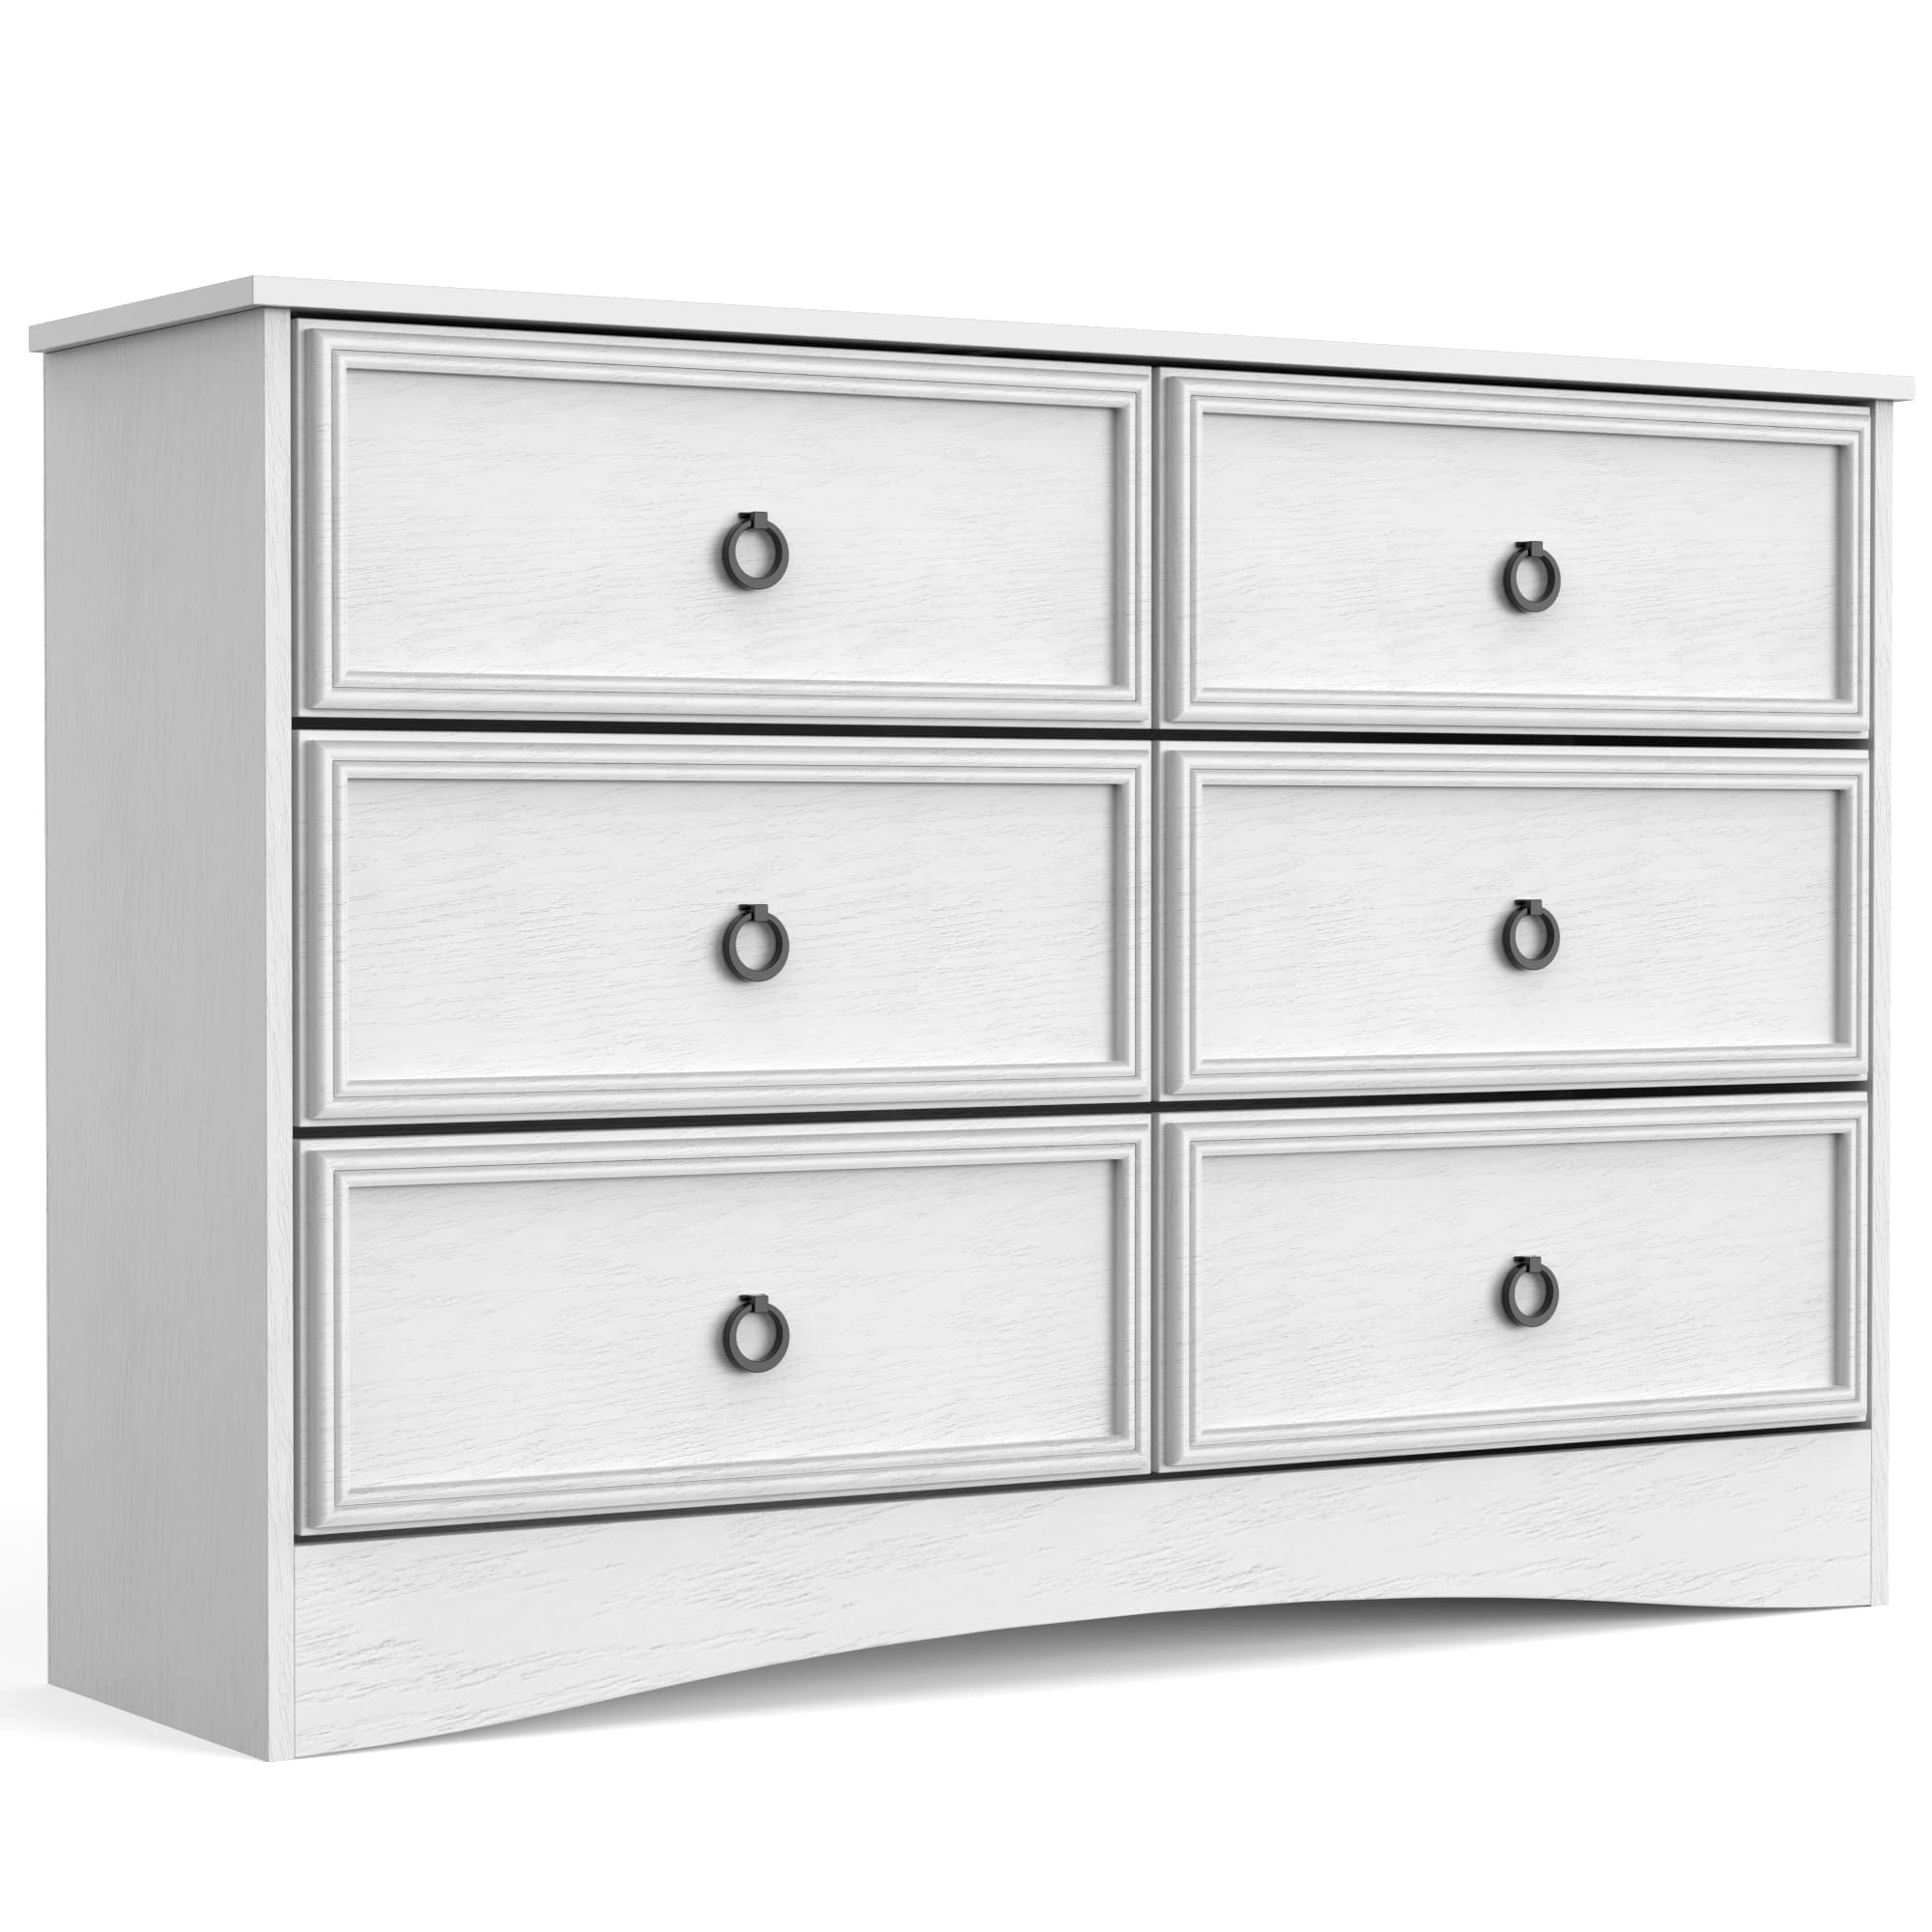 Relefree 6 Drawer Double Dresser, Modern Wood Horizontal Cabinet ...